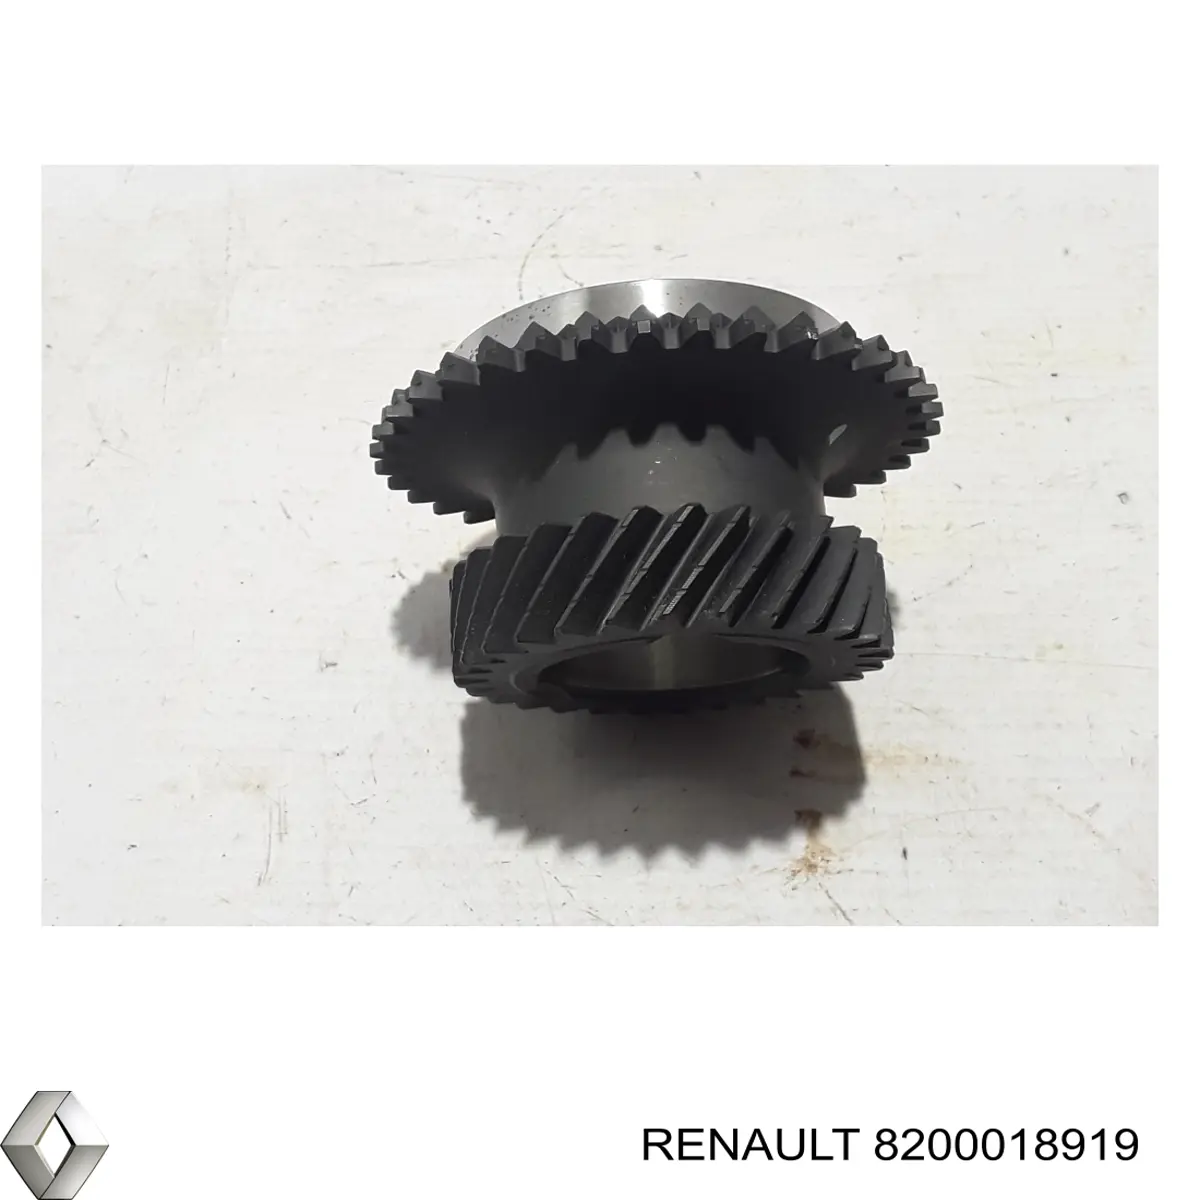 8200018919 Renault (RVI) engranaje de la marcha 6, corona dentada